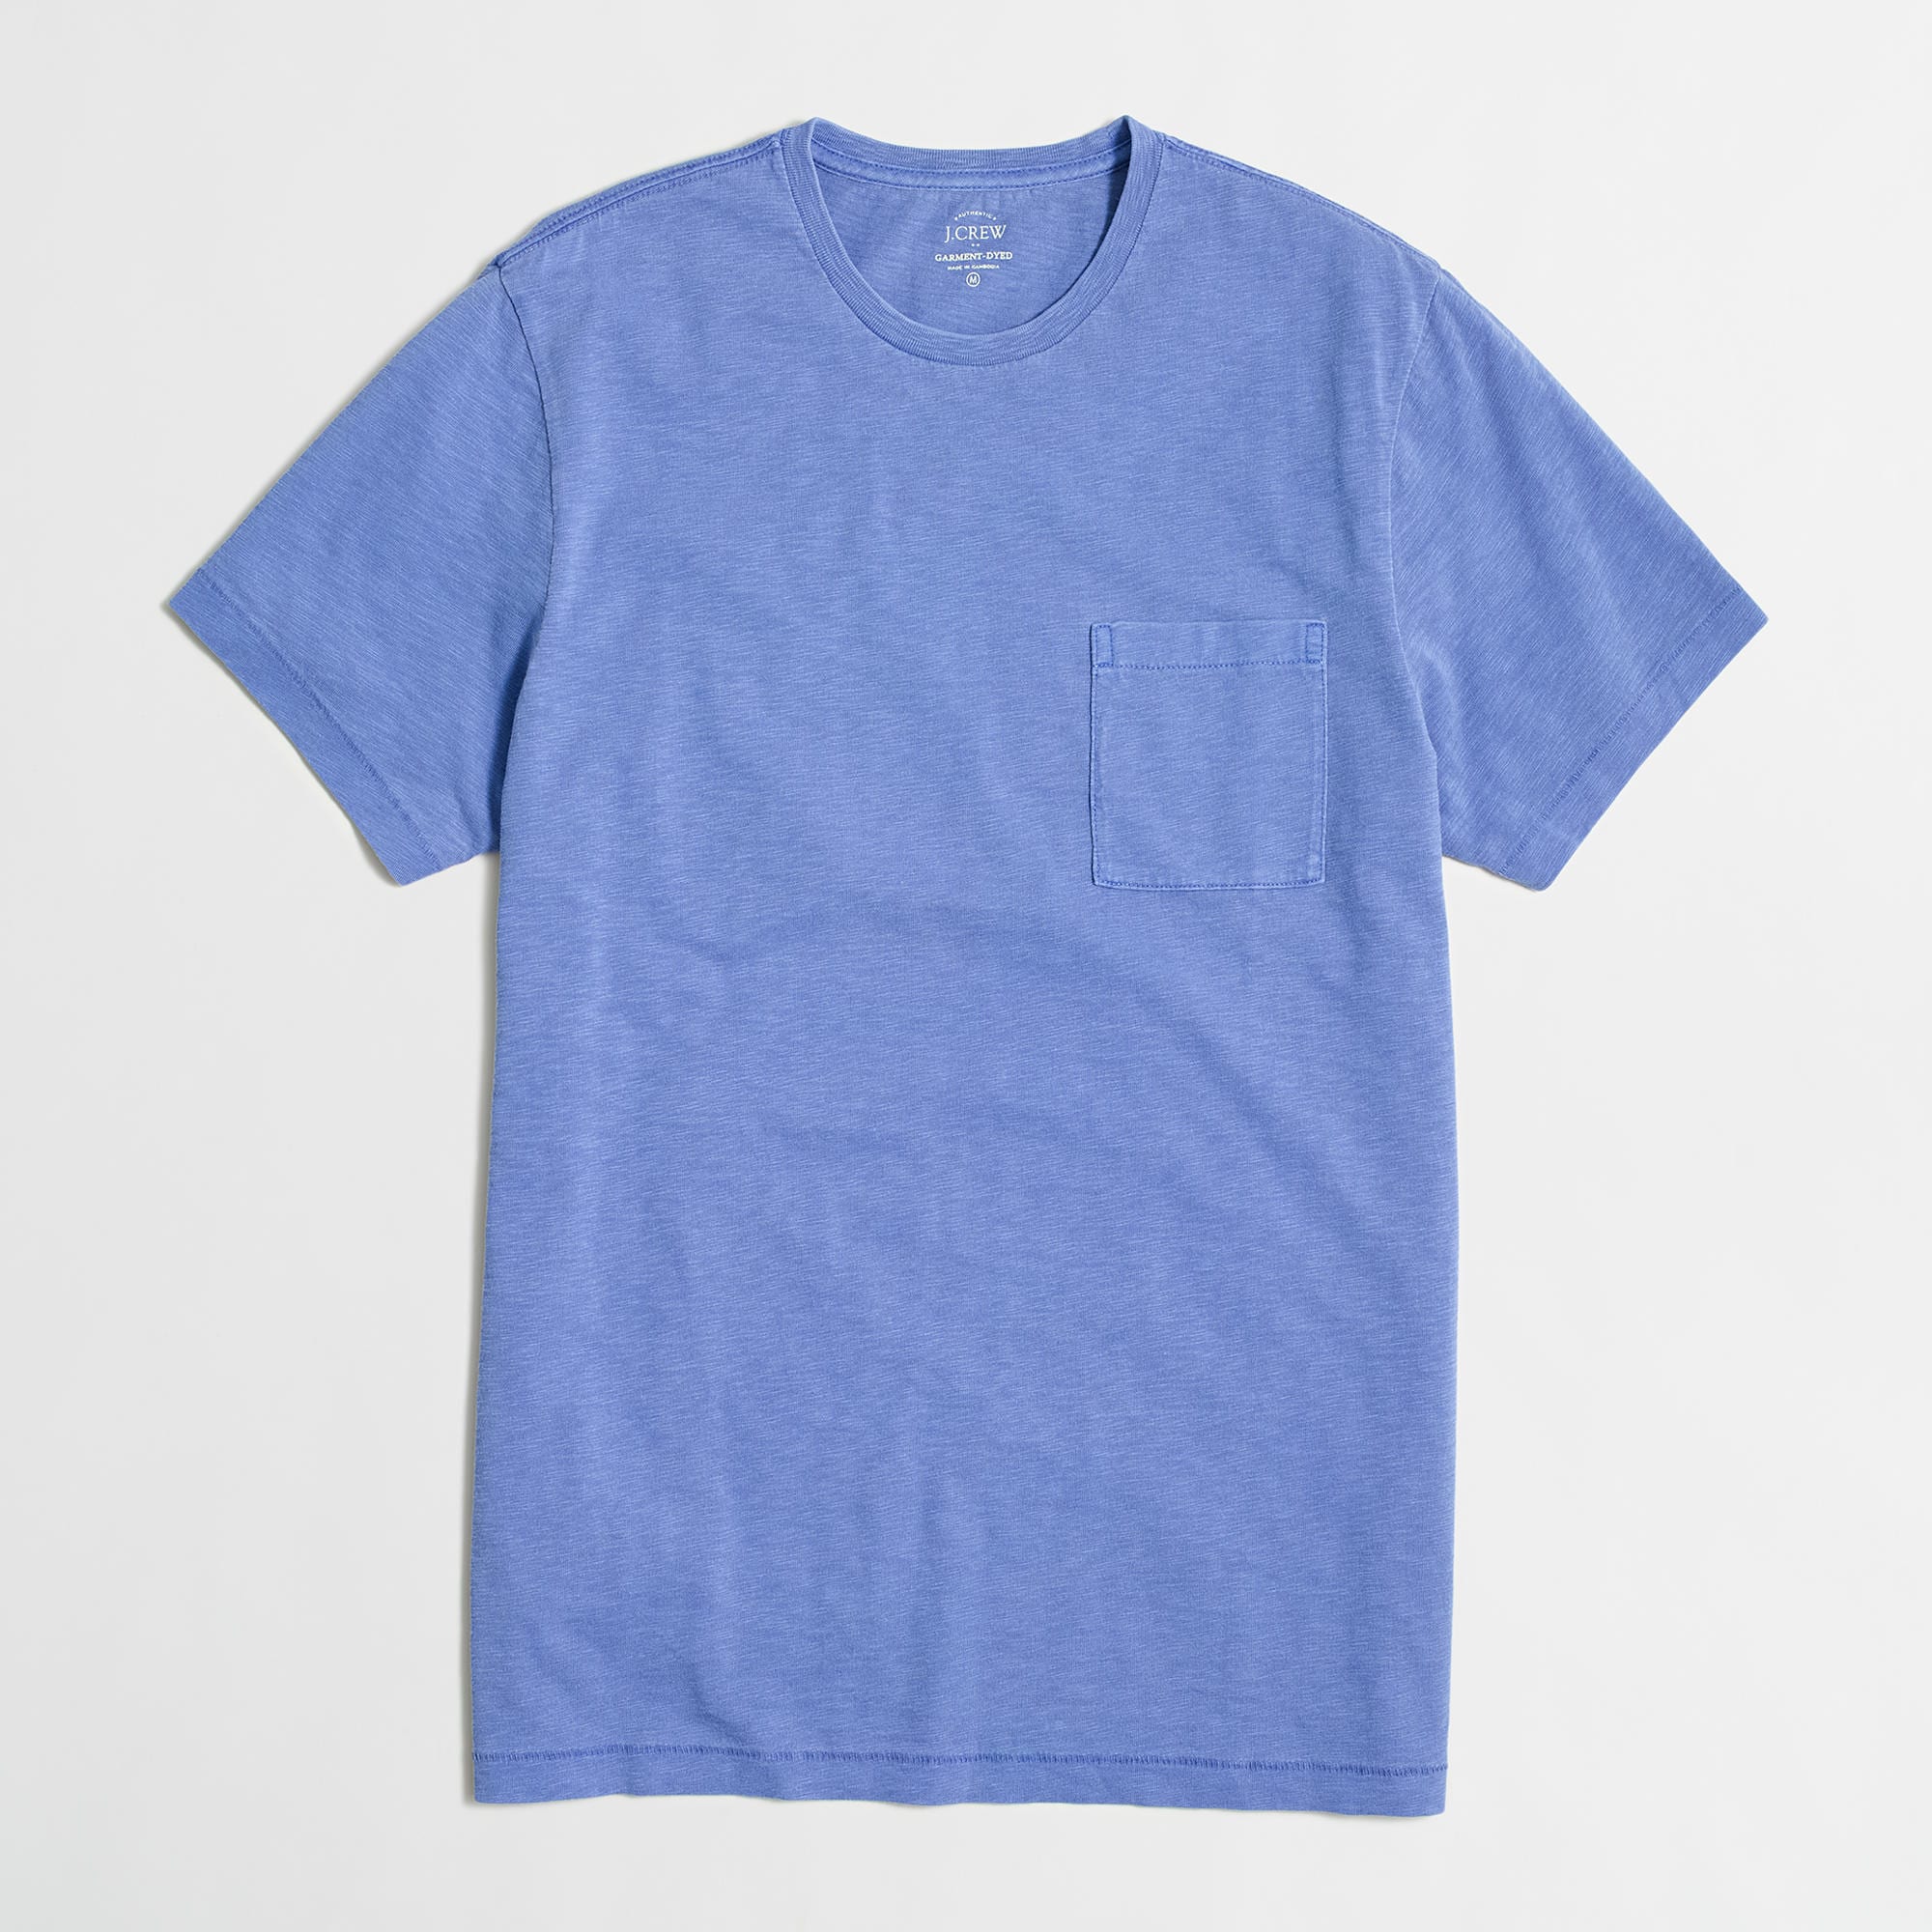 Classic Blue Pocket T Shirt 2016